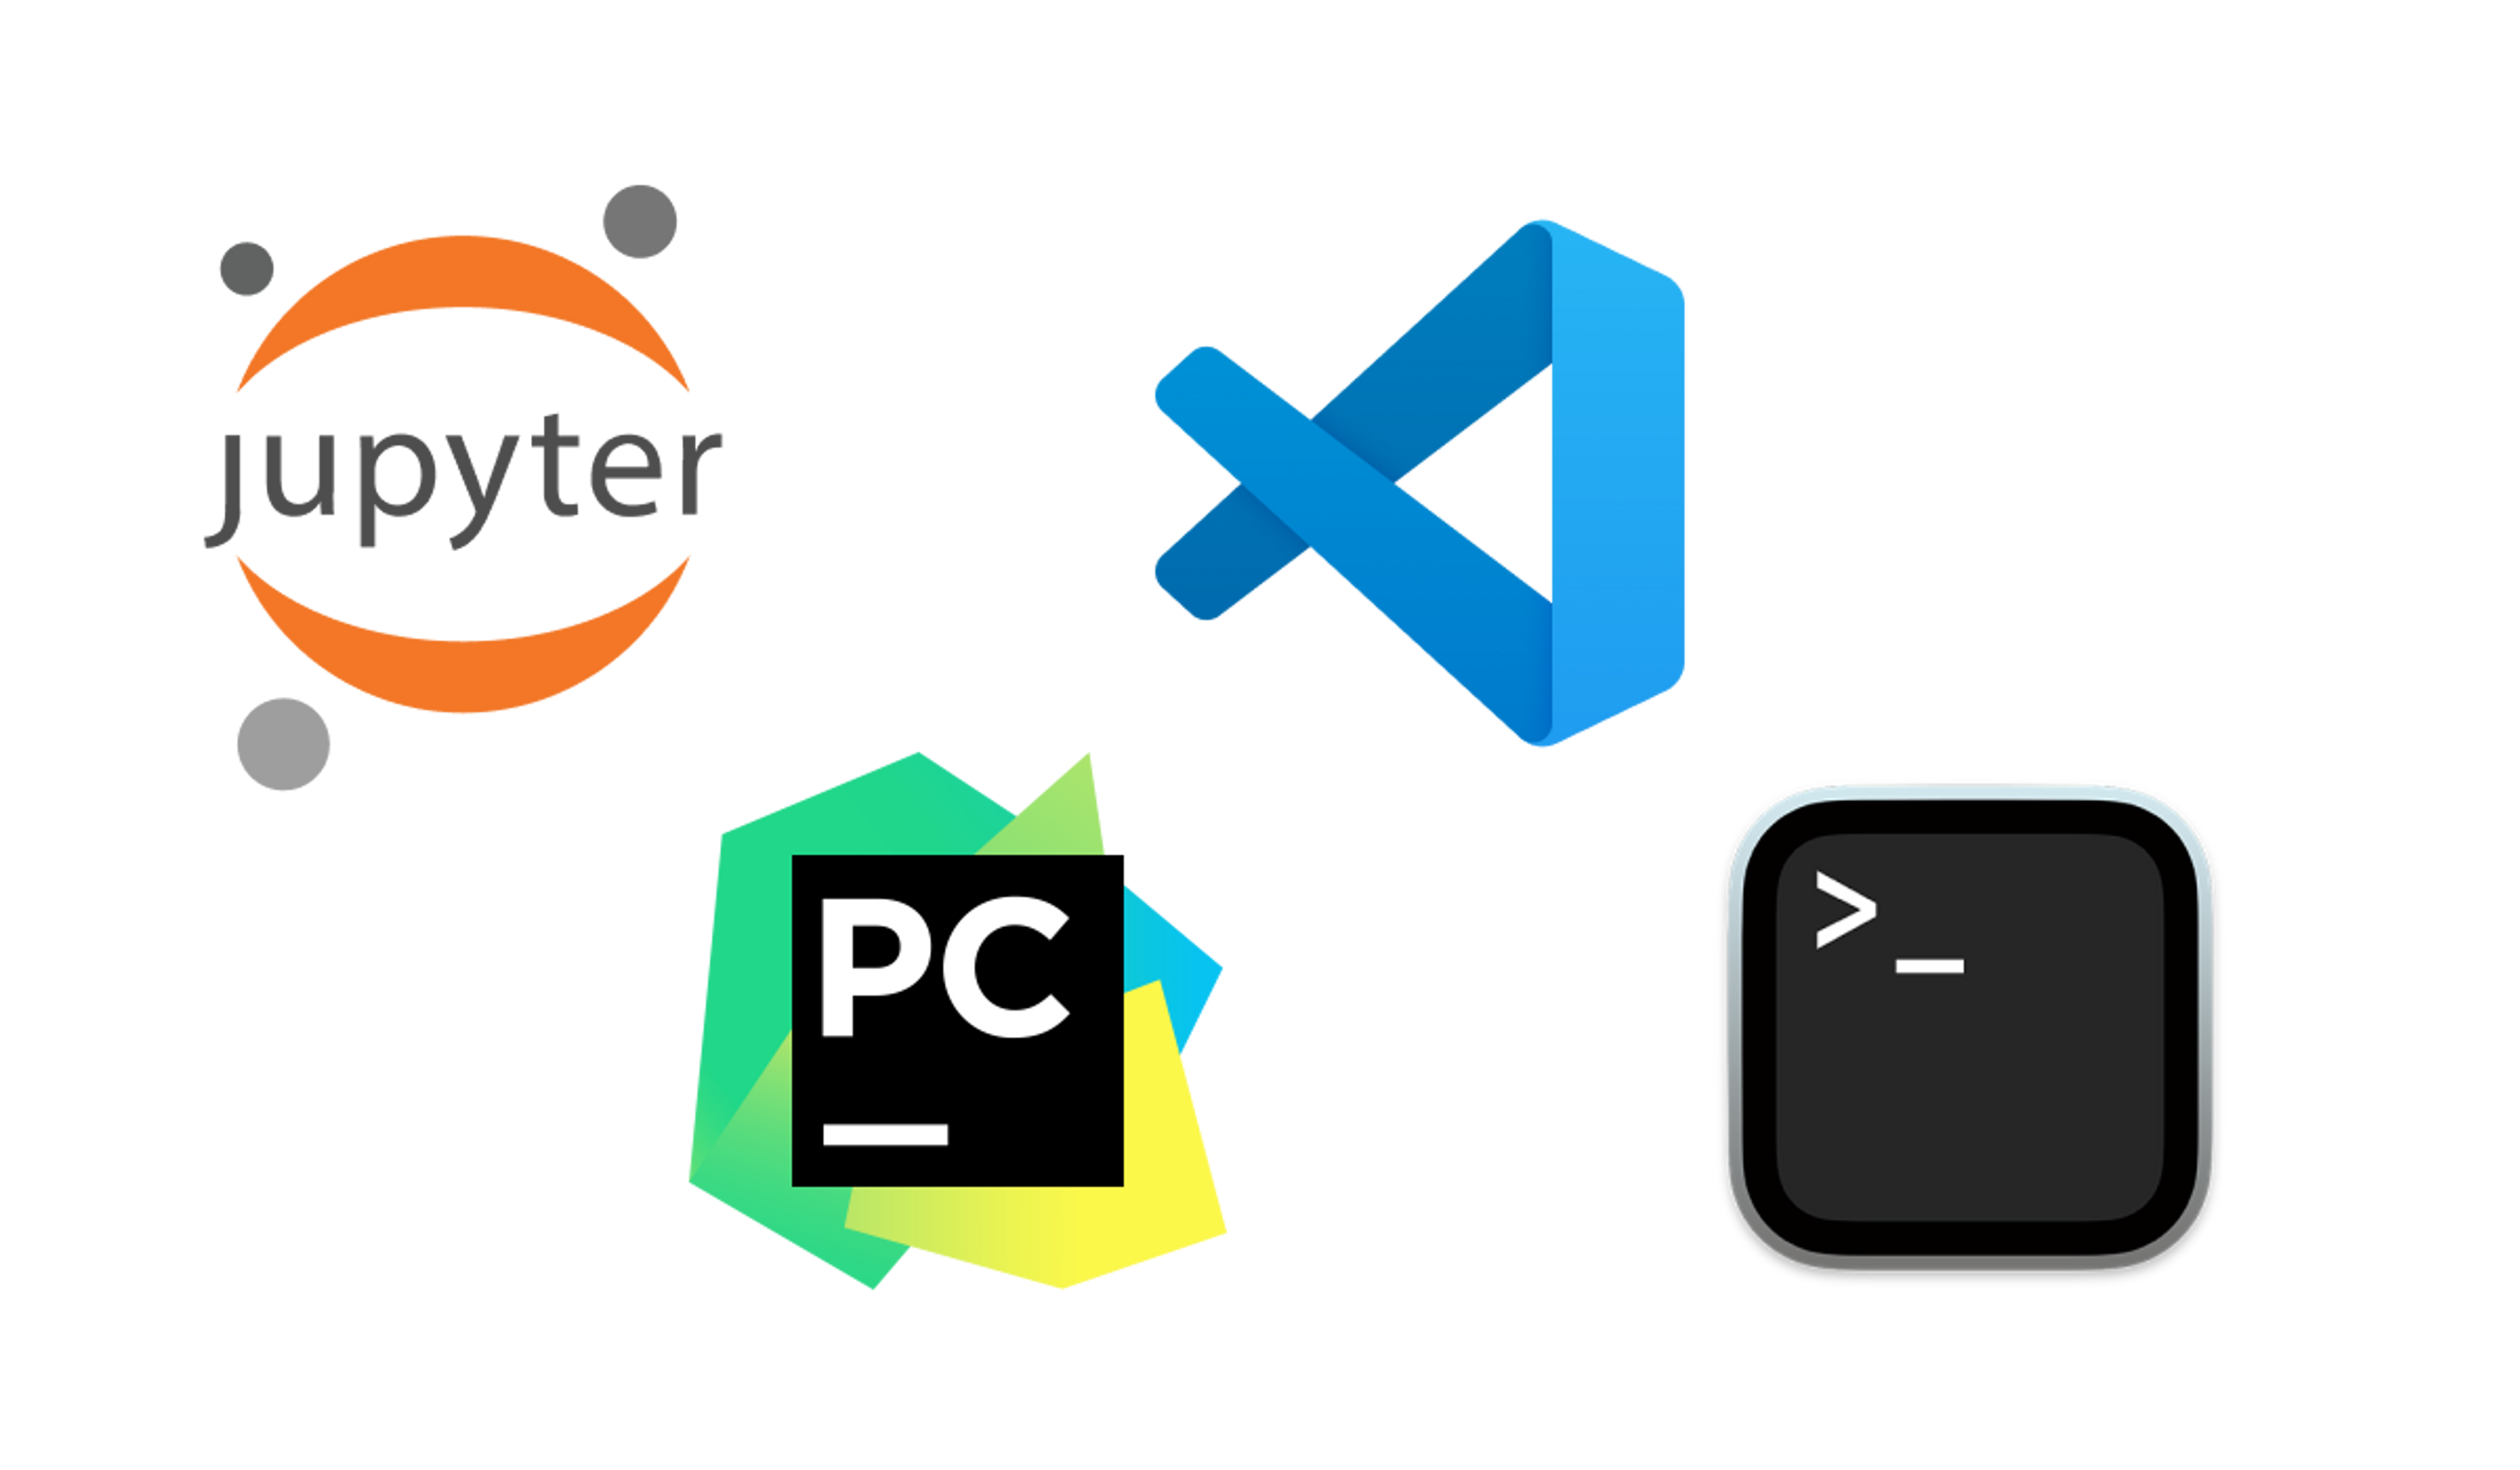 Various logos for Jupyter, Visual Studio, PyCharm, and terminal